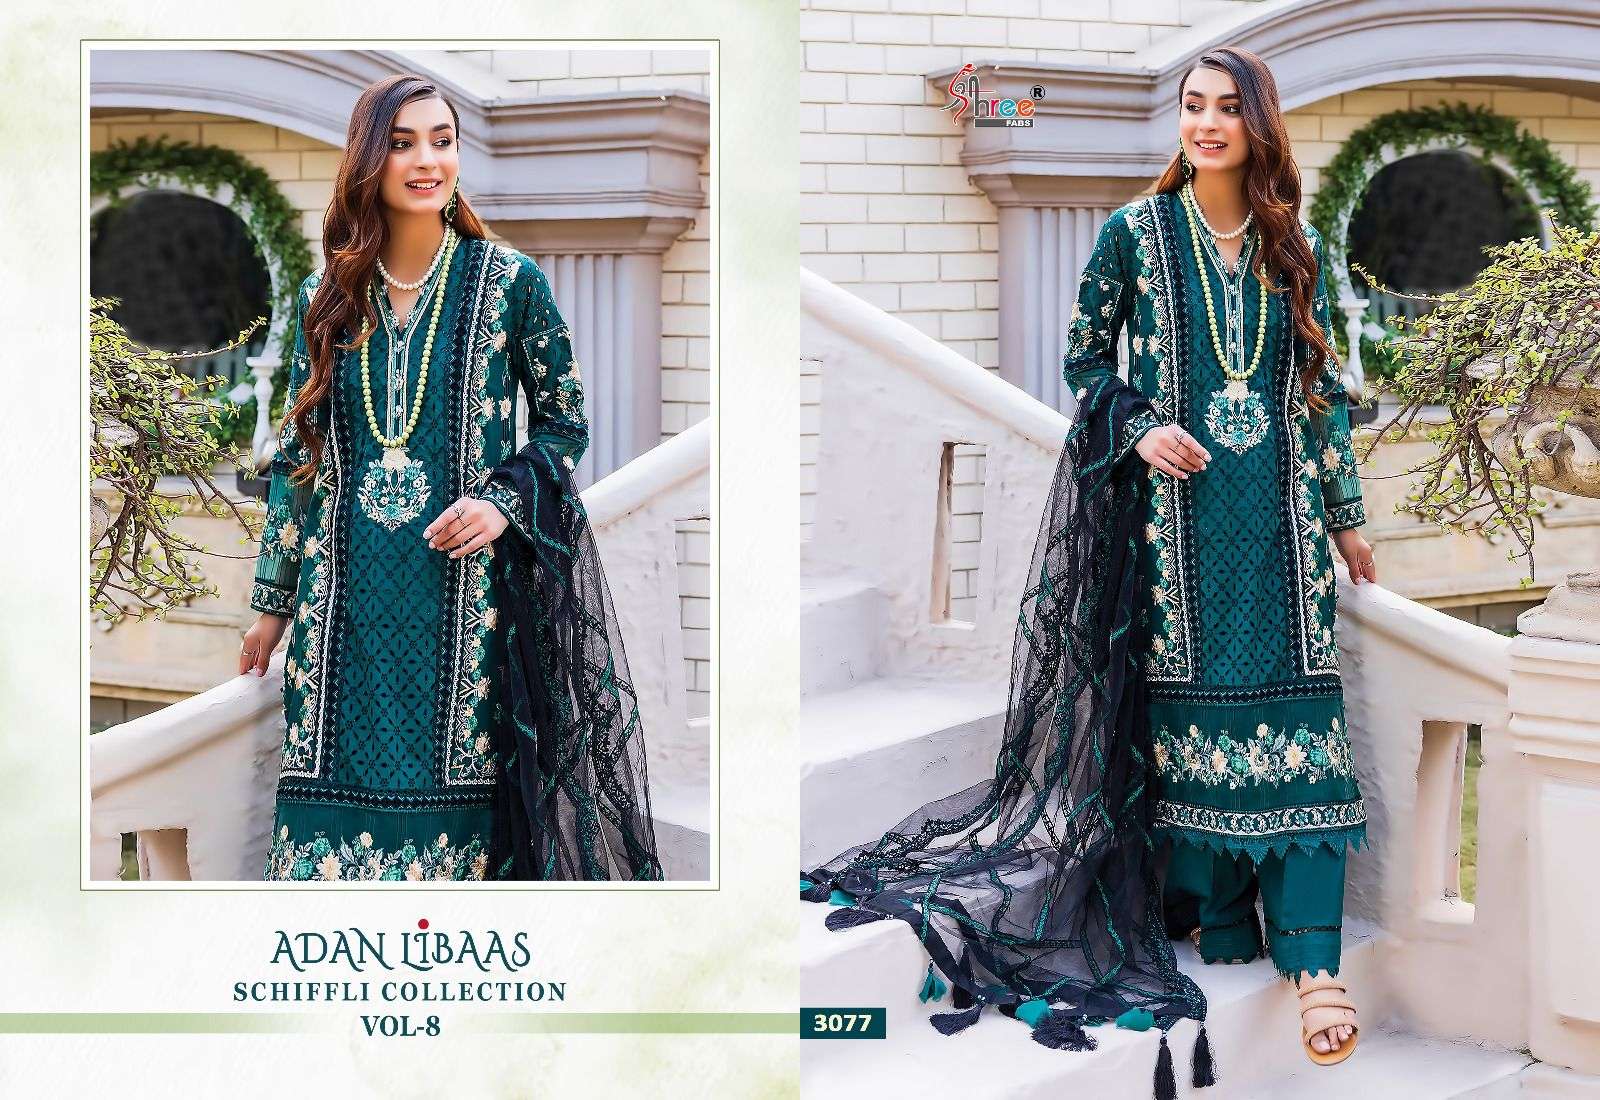 shree fabs adan libaas schiffli collection vol-8 3091-3095 series pure cotton designer pakistani salwar suits catalogue manufacturer surat 